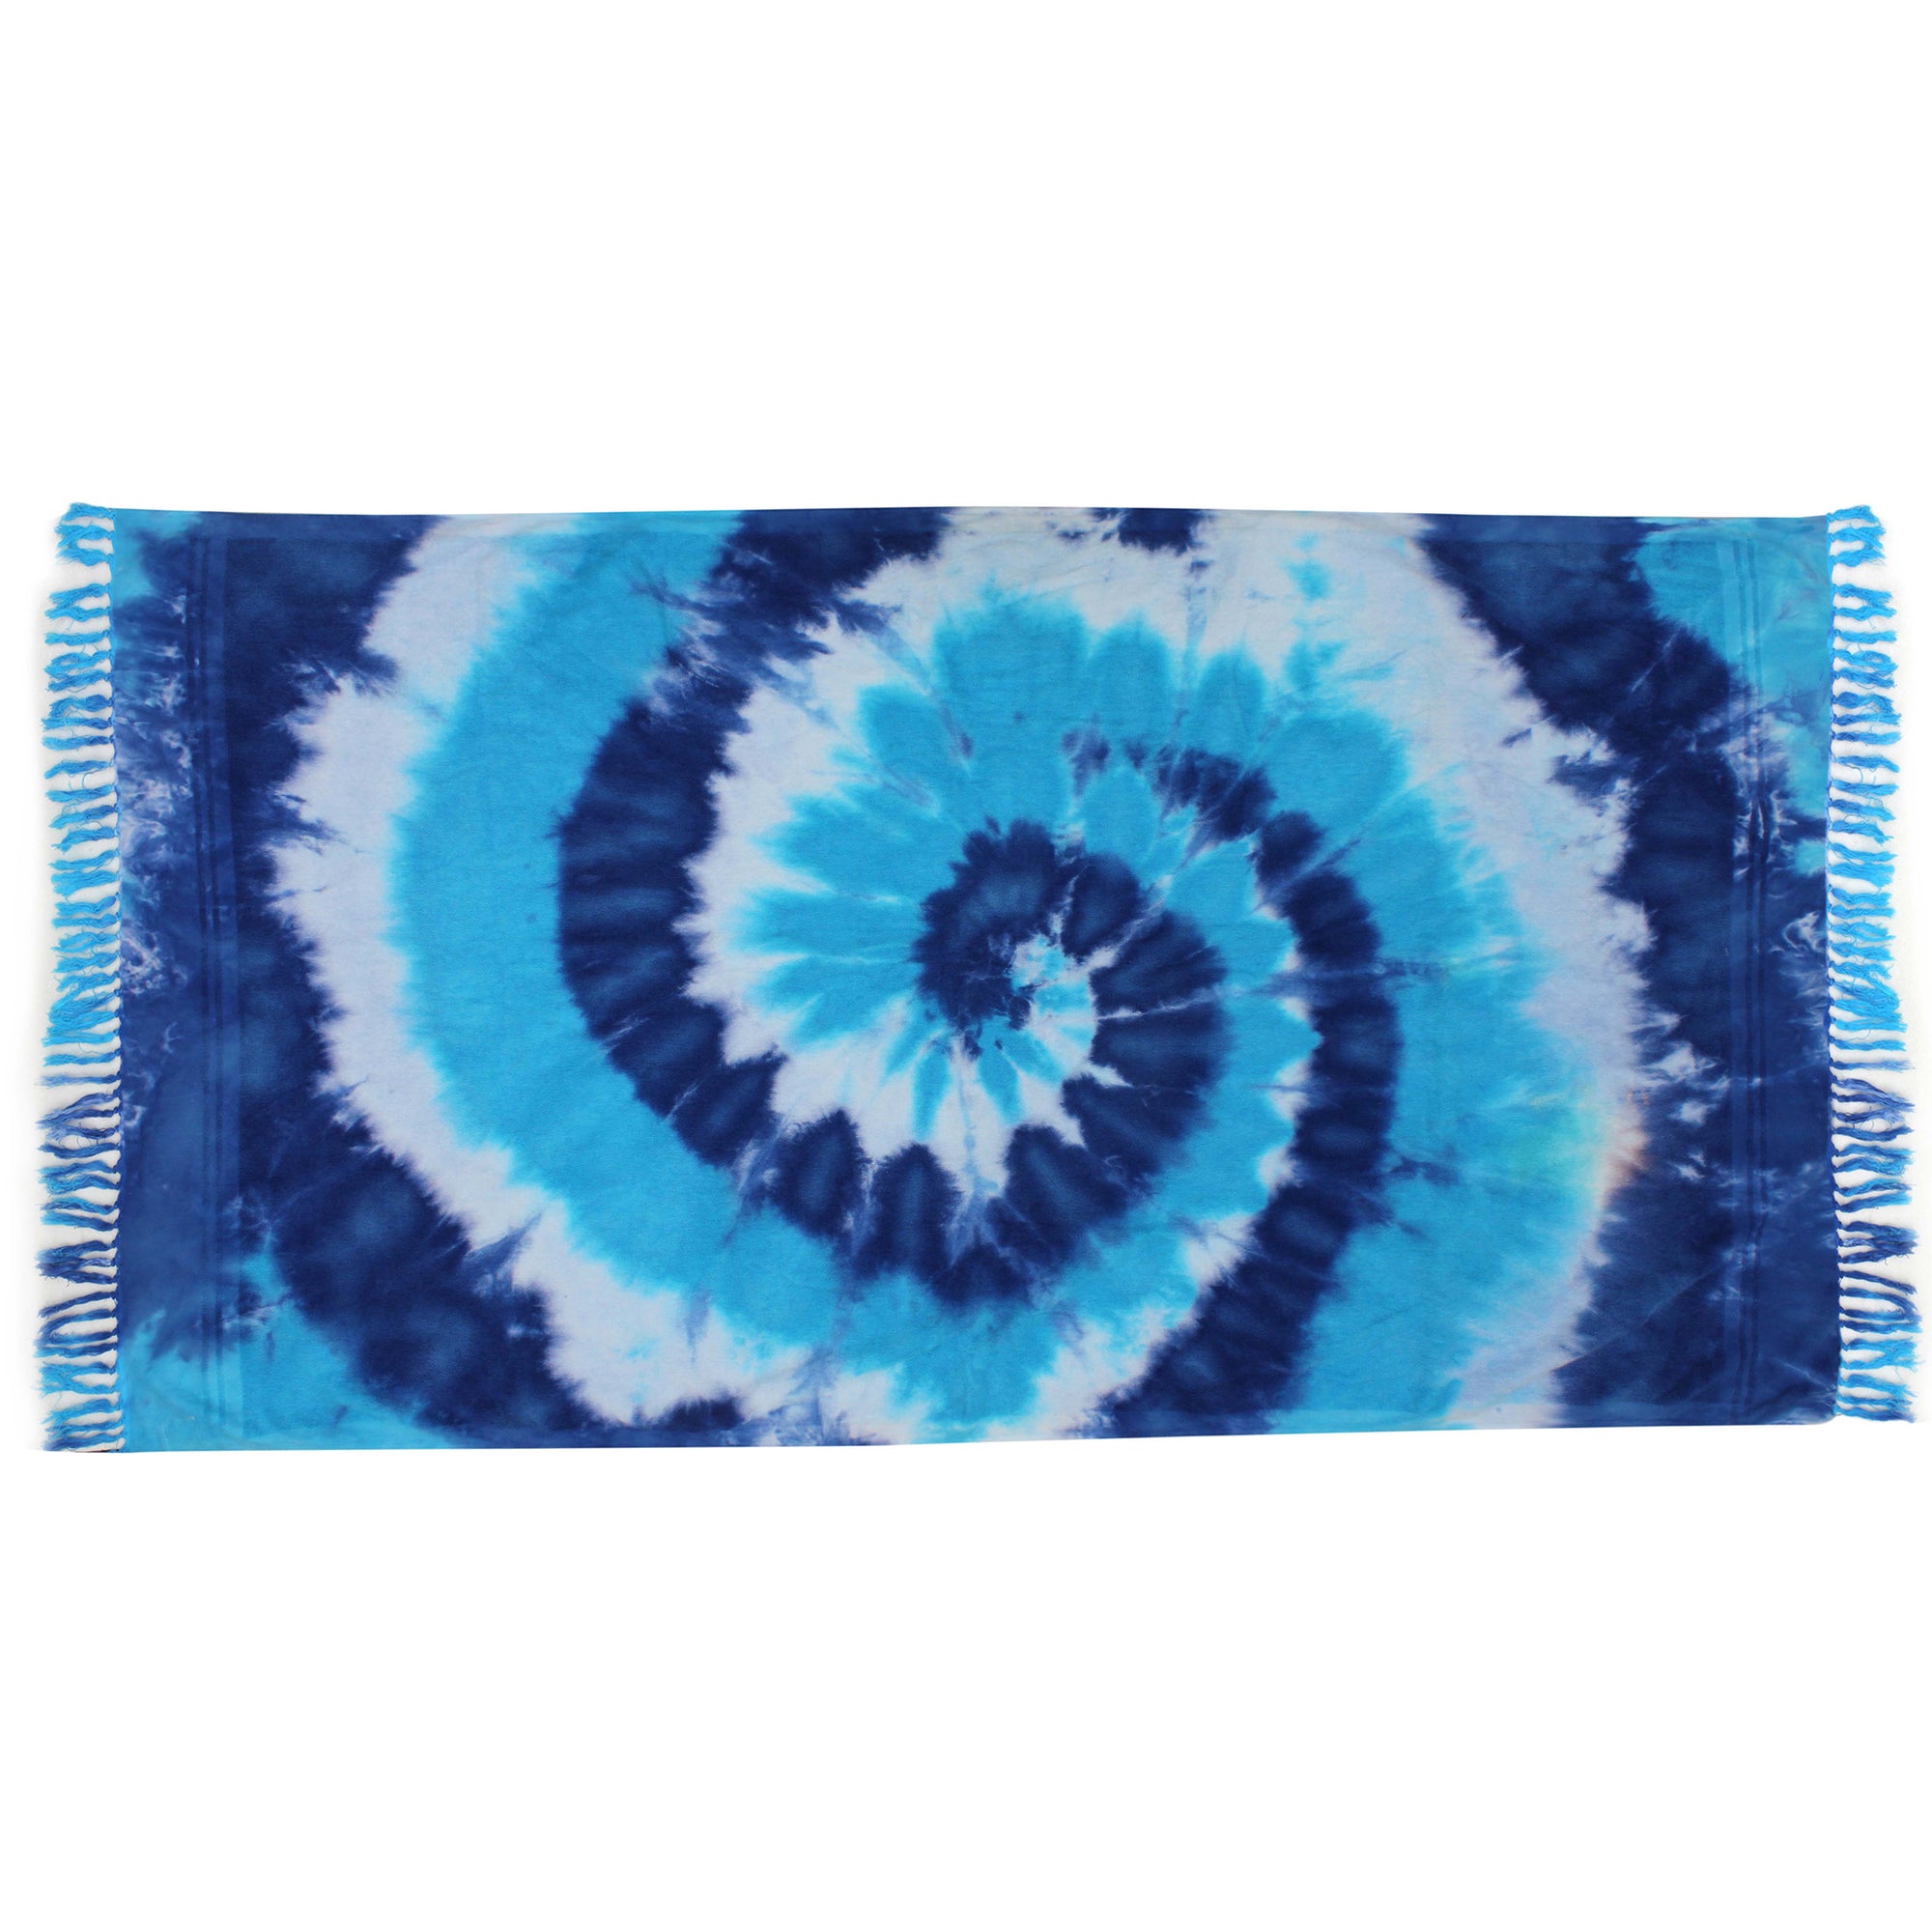 Blue/Aqua Swirl Tie Dye Beach Towel